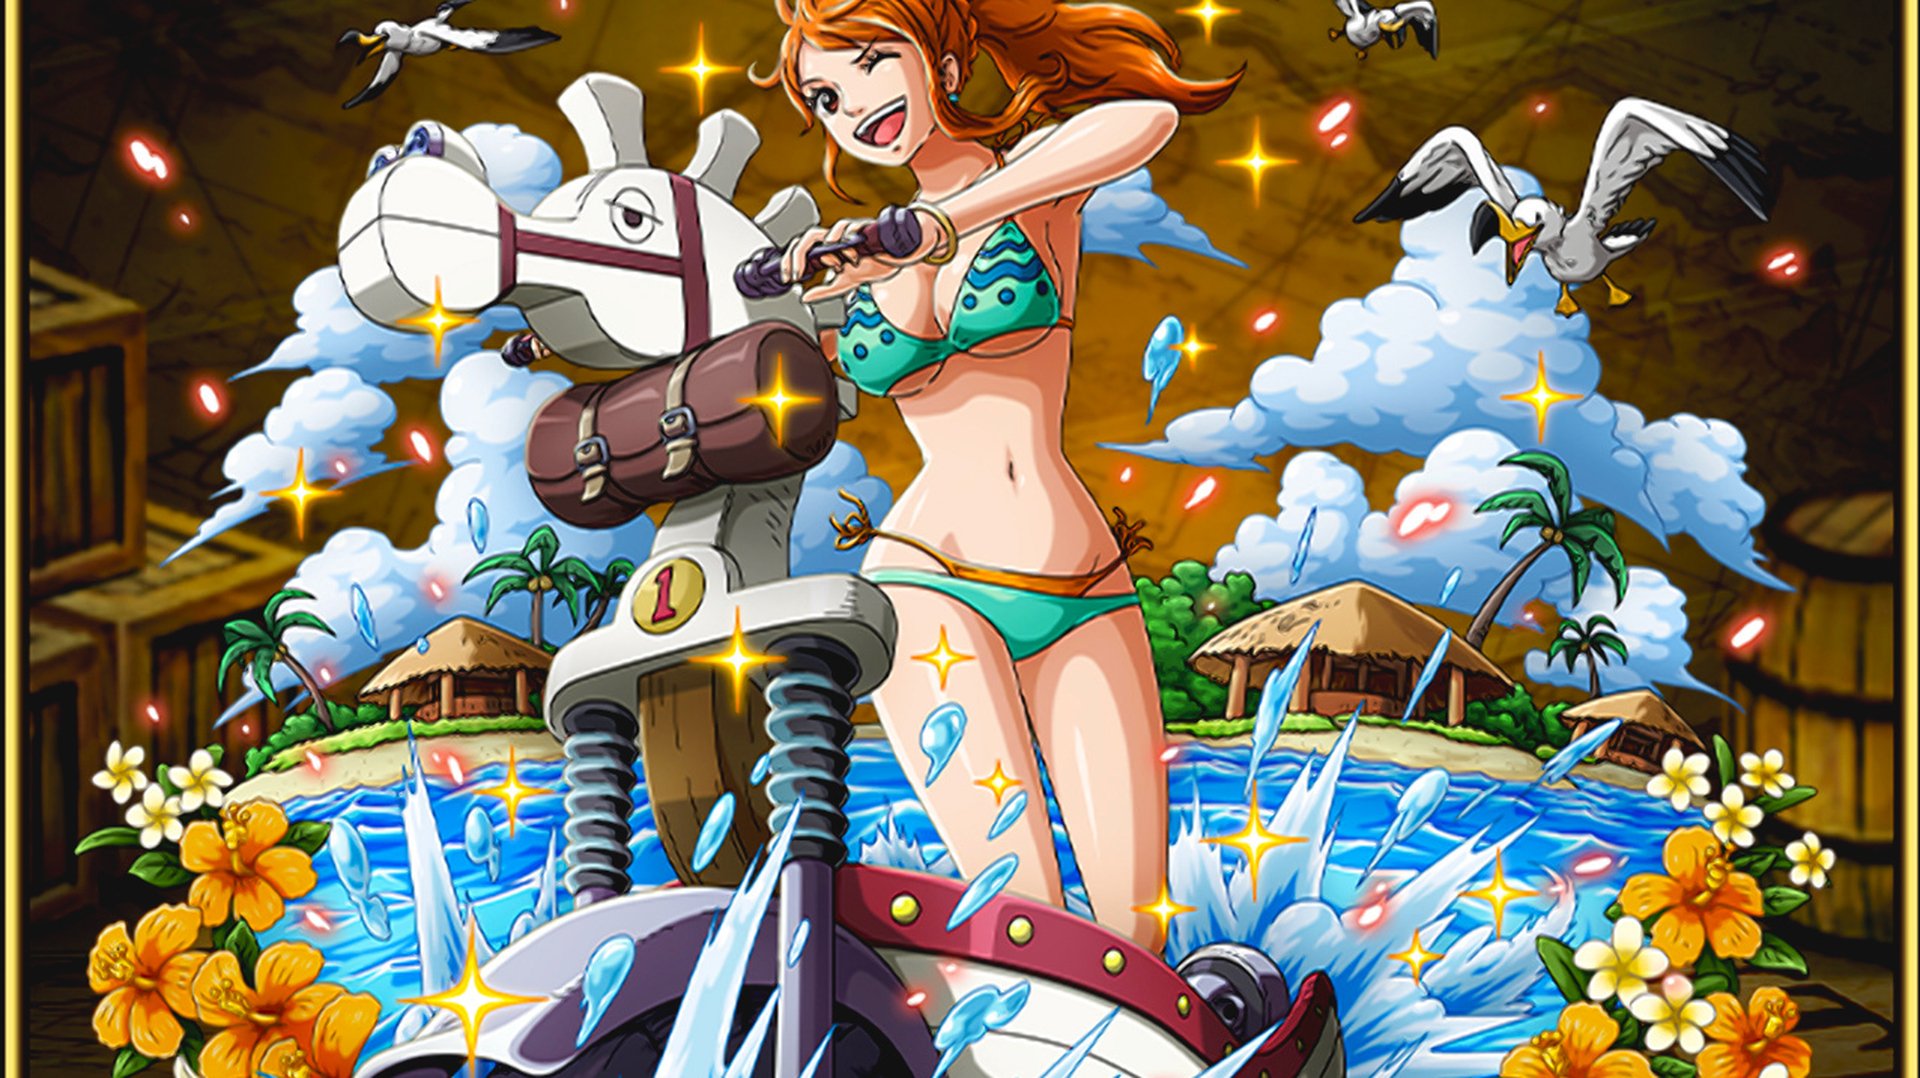 Anime One Piece Nami (One Piece) Image. 